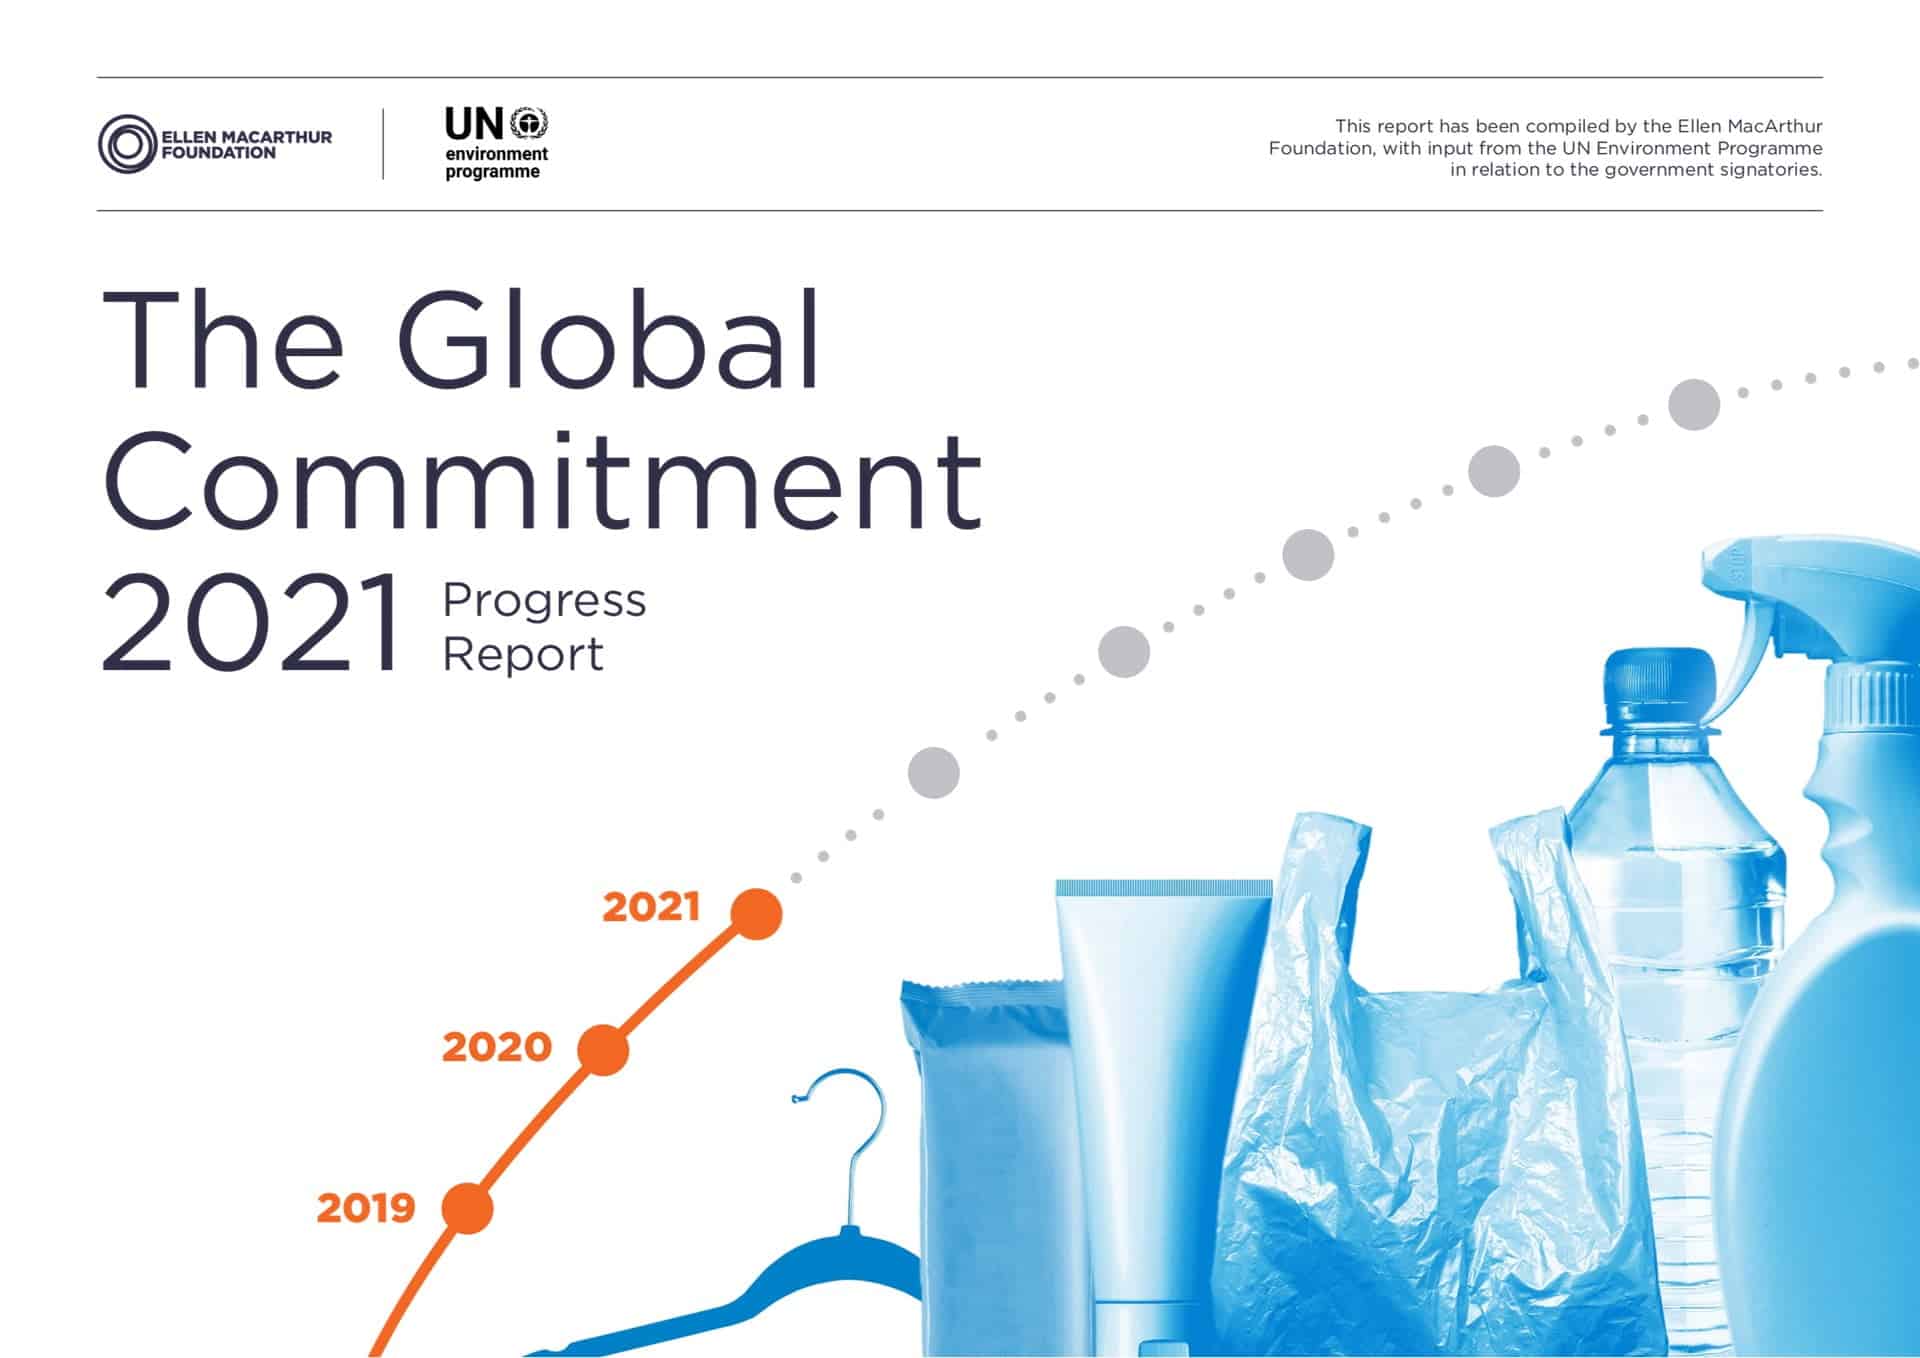 thefuture, The Global Commitment 2021 Progress Report